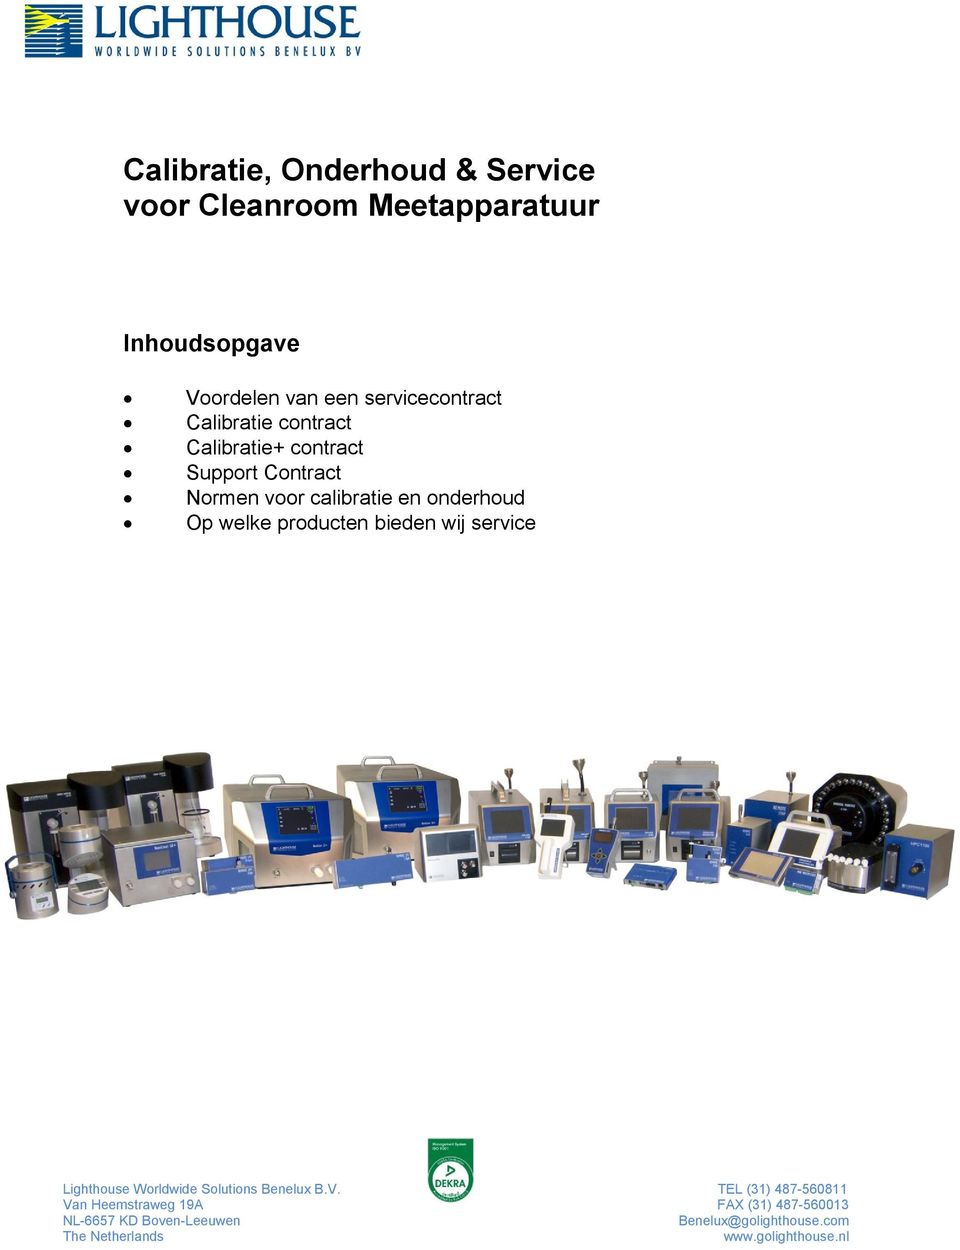 servicecontract Calibratie contract Calibratie+ contract